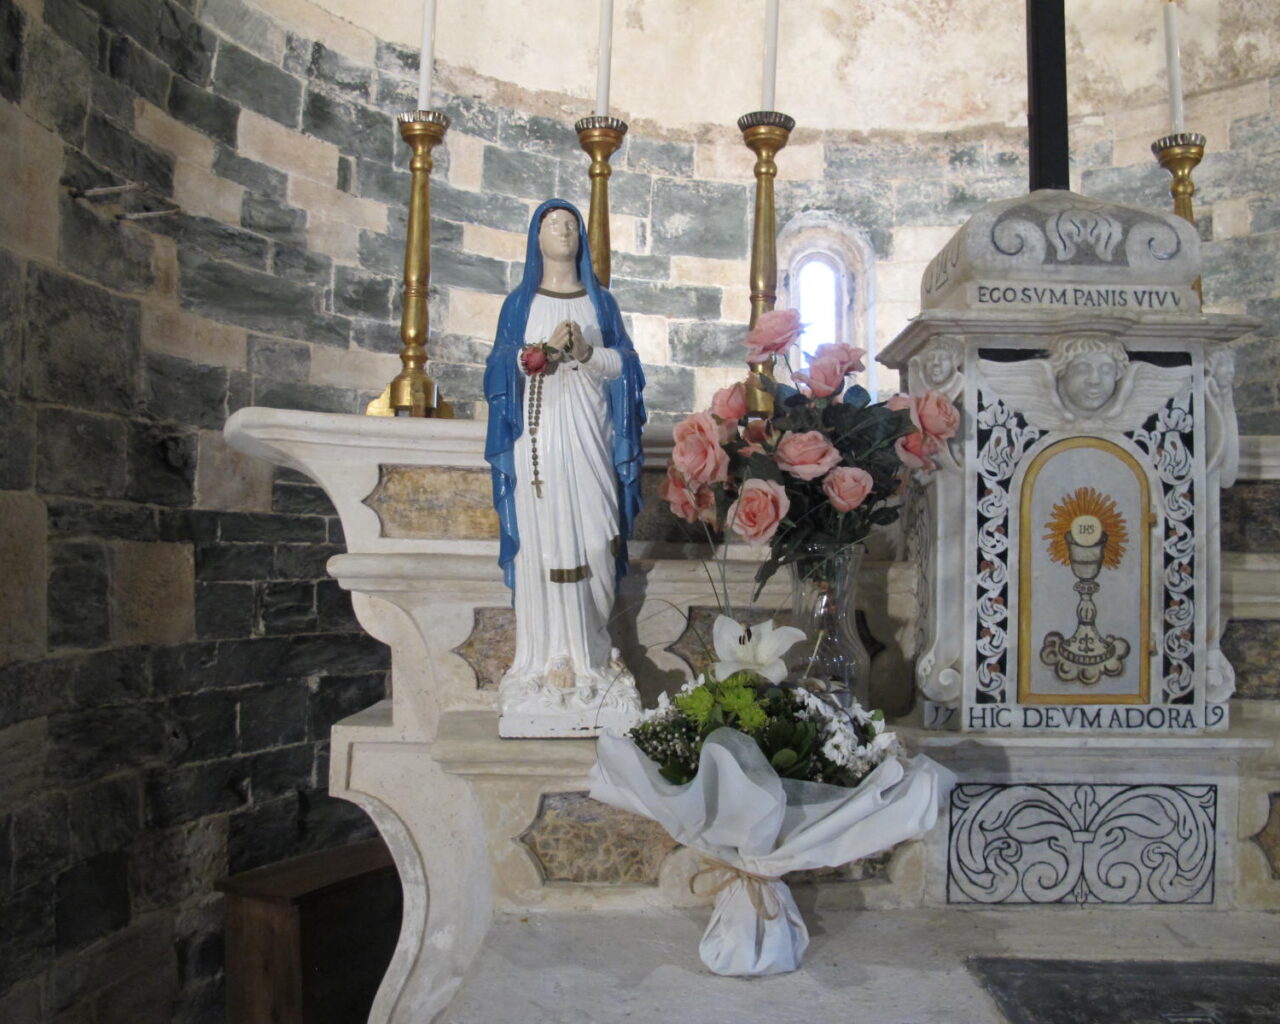 47 Le tabernacle datant de 1719 est en marbre de Carrara